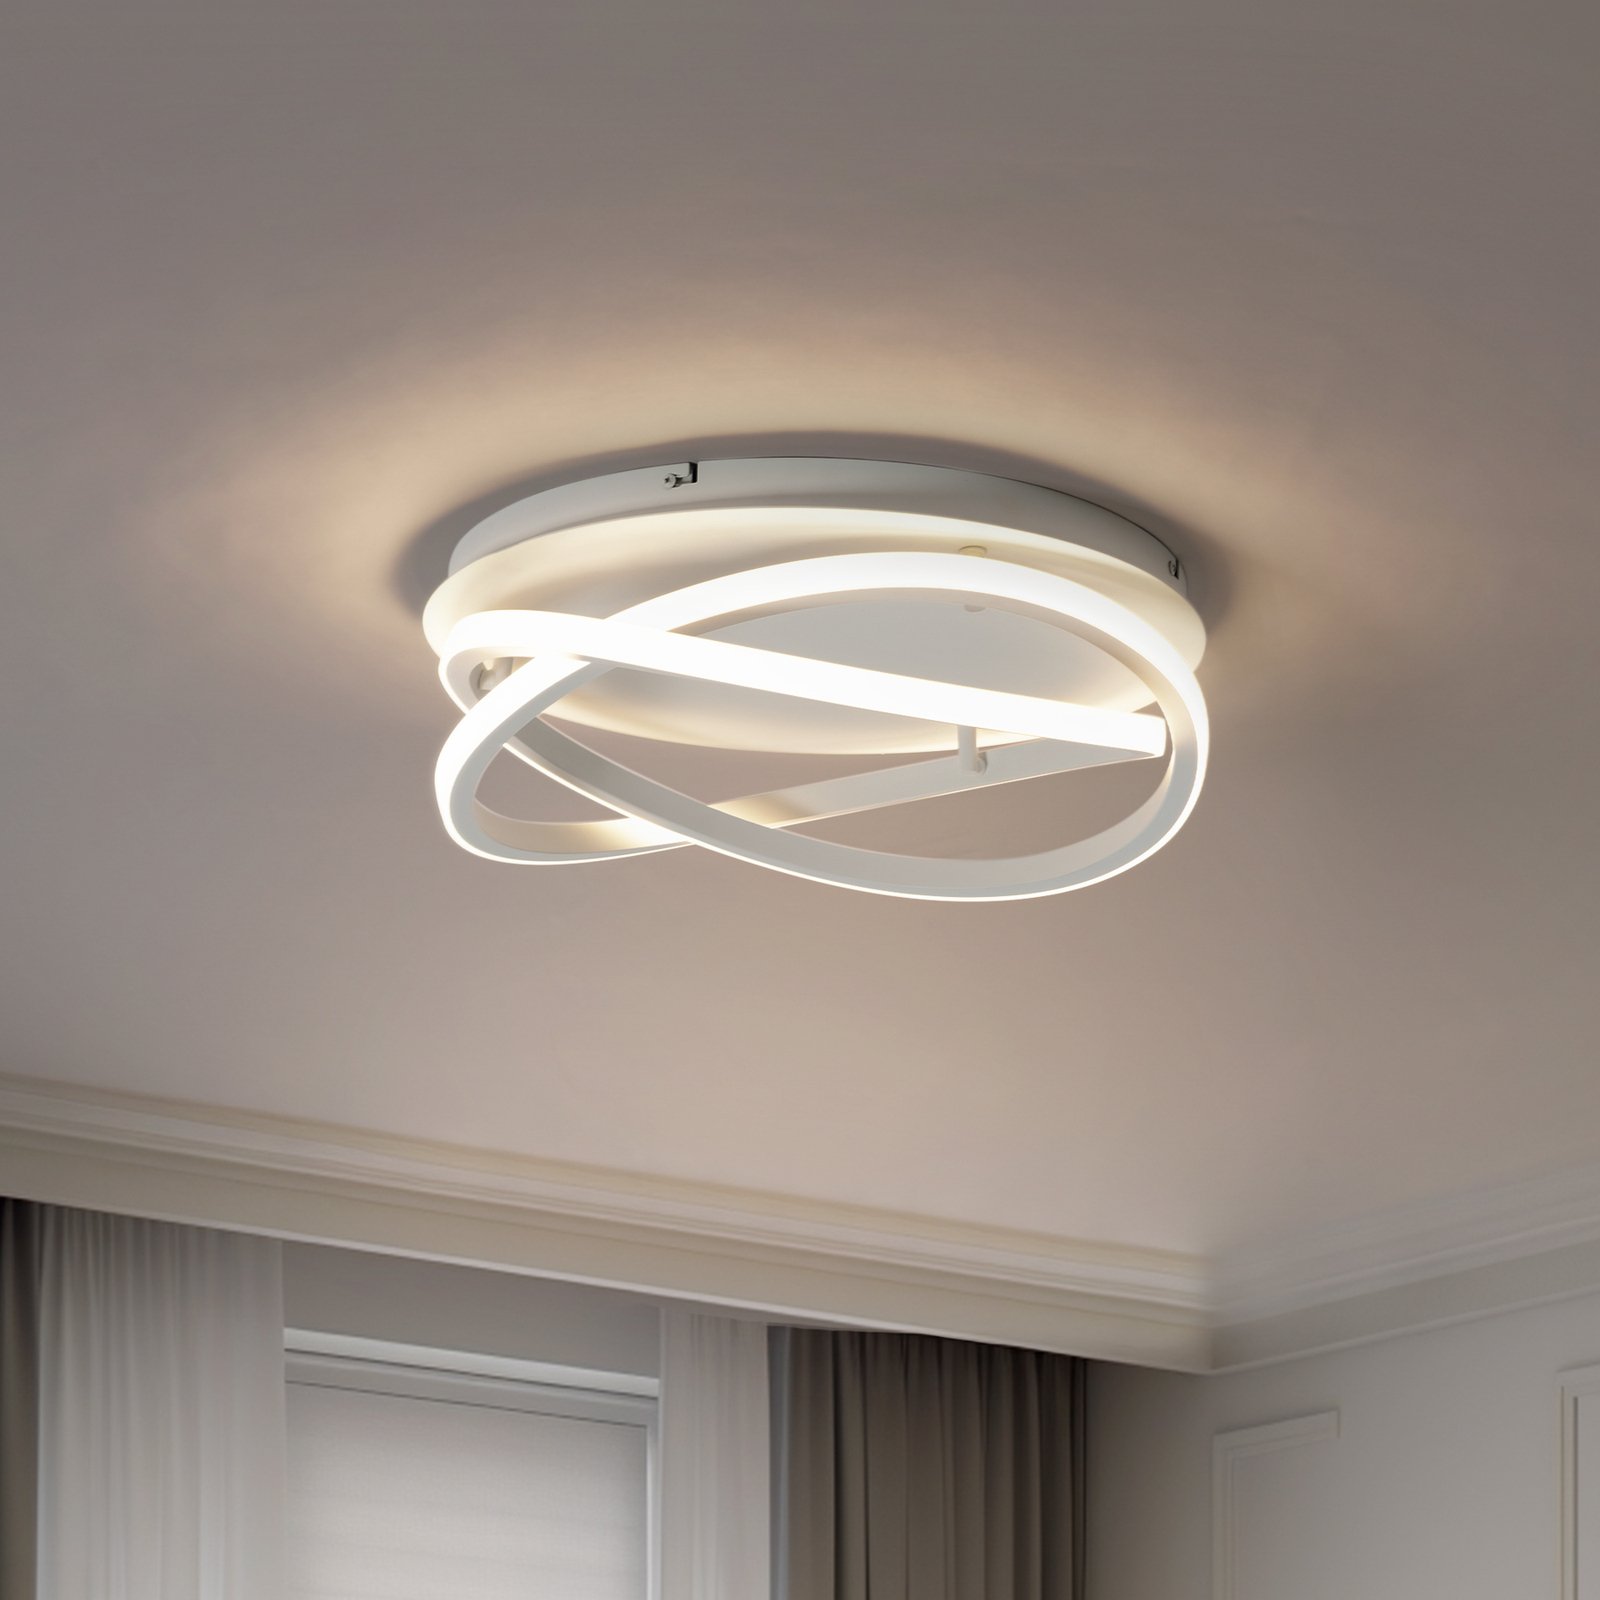 Lucande LED ceiling light Aldric, white, aluminium, Ø 45 cm